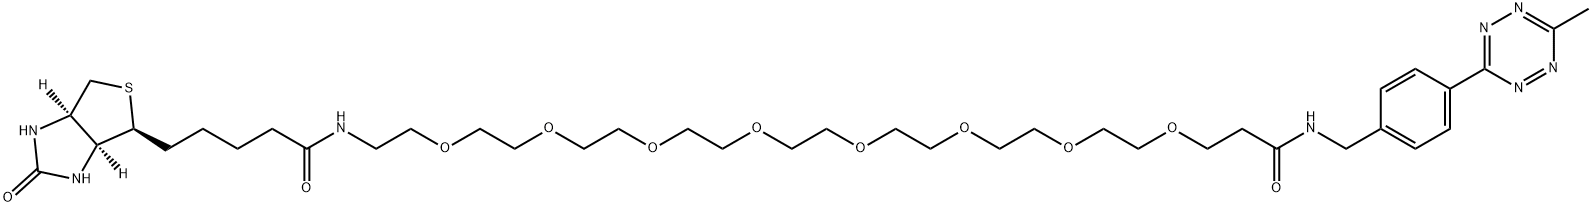 Biotin-PEG8-Me-Tet Structure